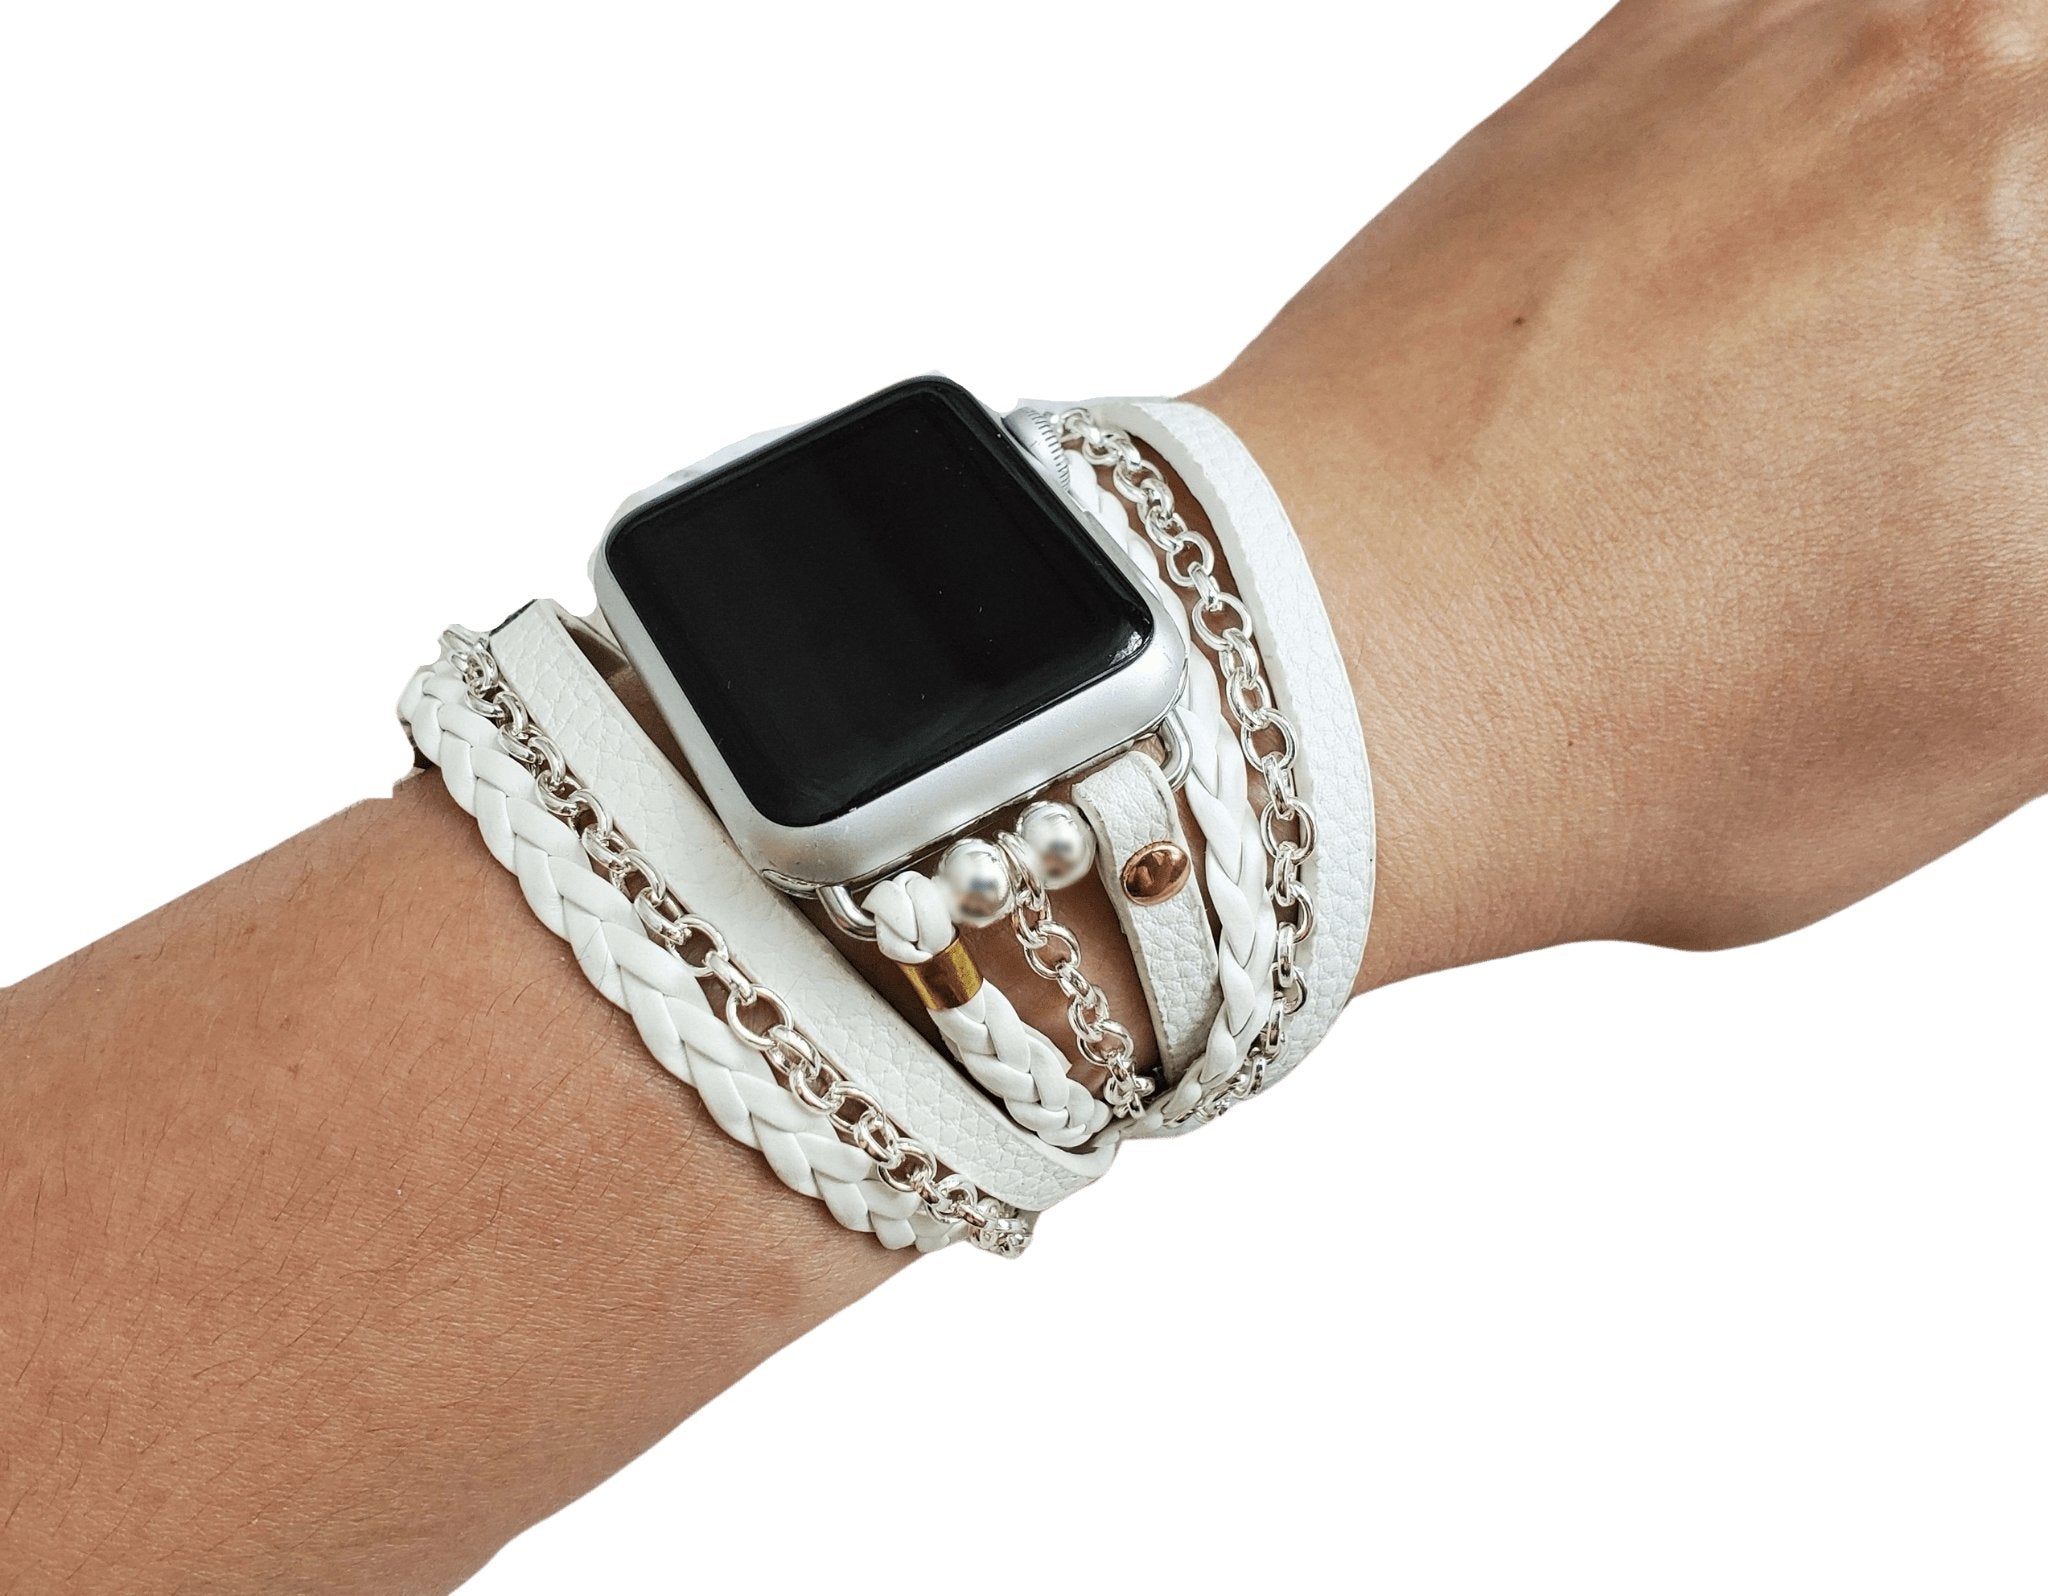 White Boho Hippie Wrap Bracelet Watch Band with Silver Chain